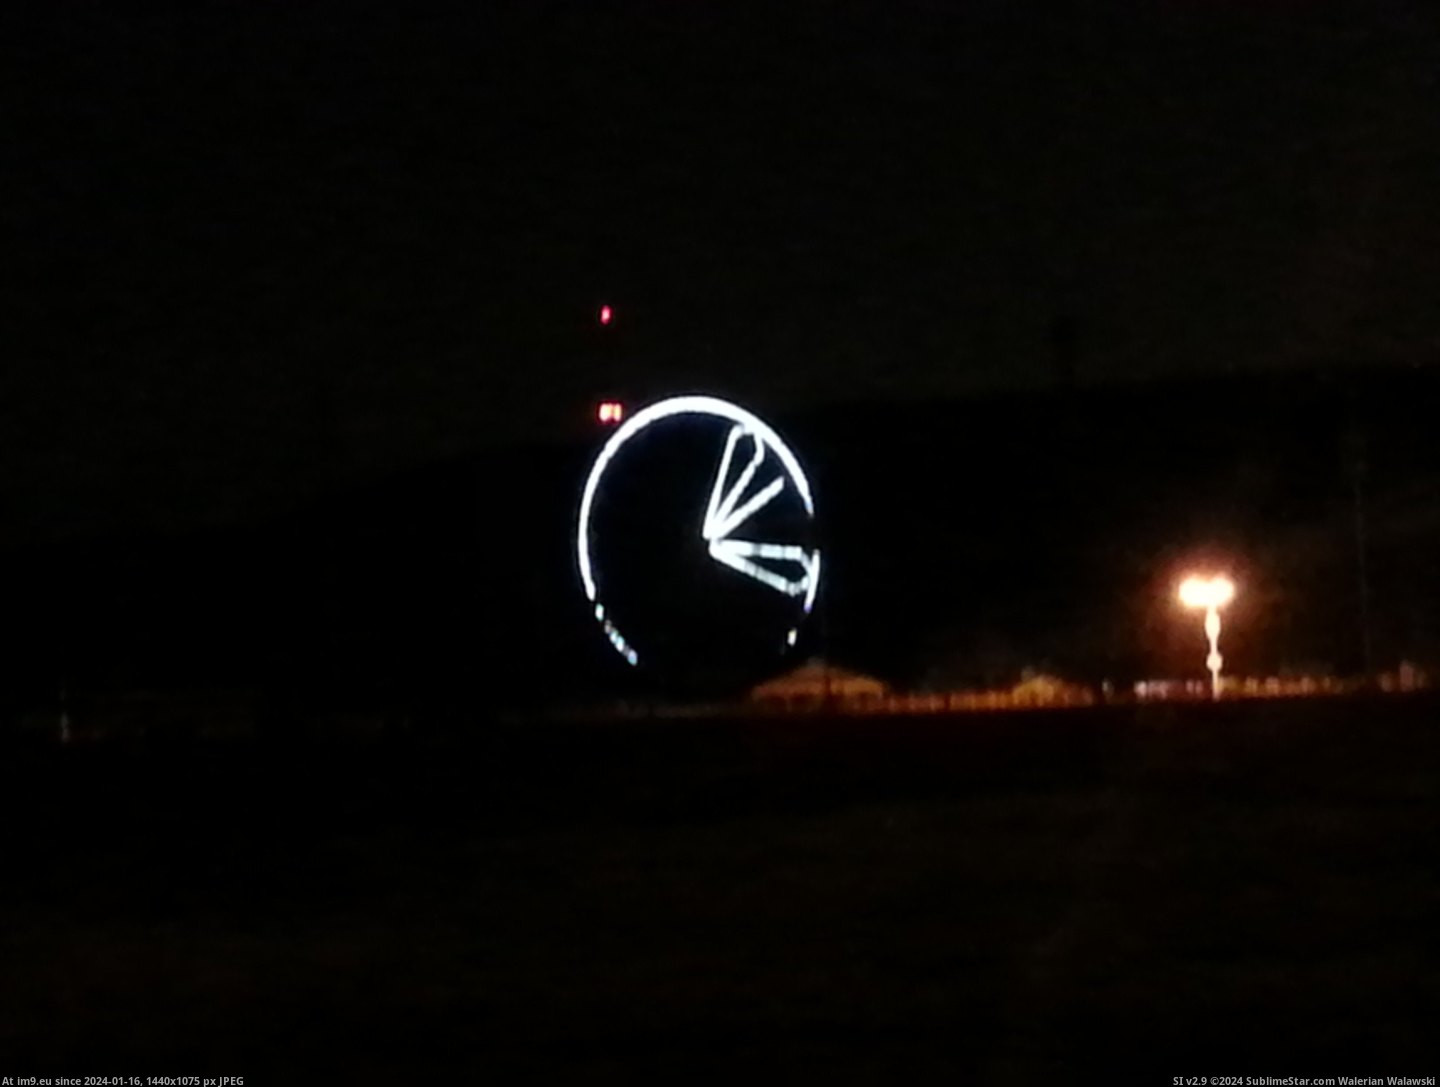 #Big #Night #Off #Clock #Wheel #Flags #Ferris #Season #Turns #Six [Mildlyinteresting] The ferris wheel at Six Flags turns into a big clock at night in the off season. Pic. (Bild von album My r/MILDLYINTERESTING favs))